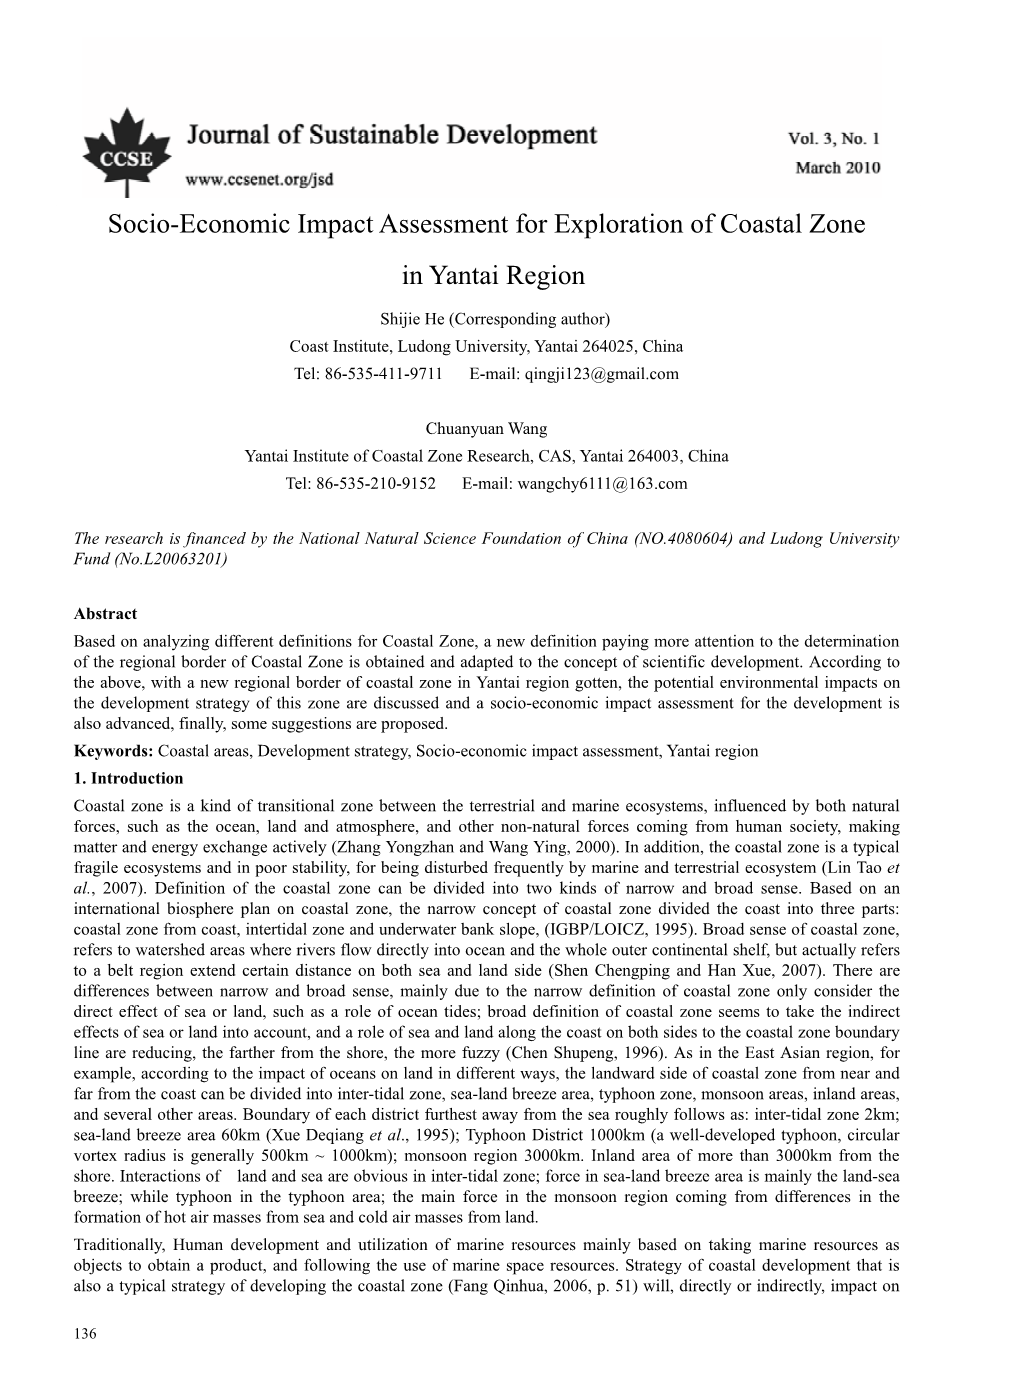 Socio-Economic Impact Assessment for Exploration of Coastal Zone in Yantai Region